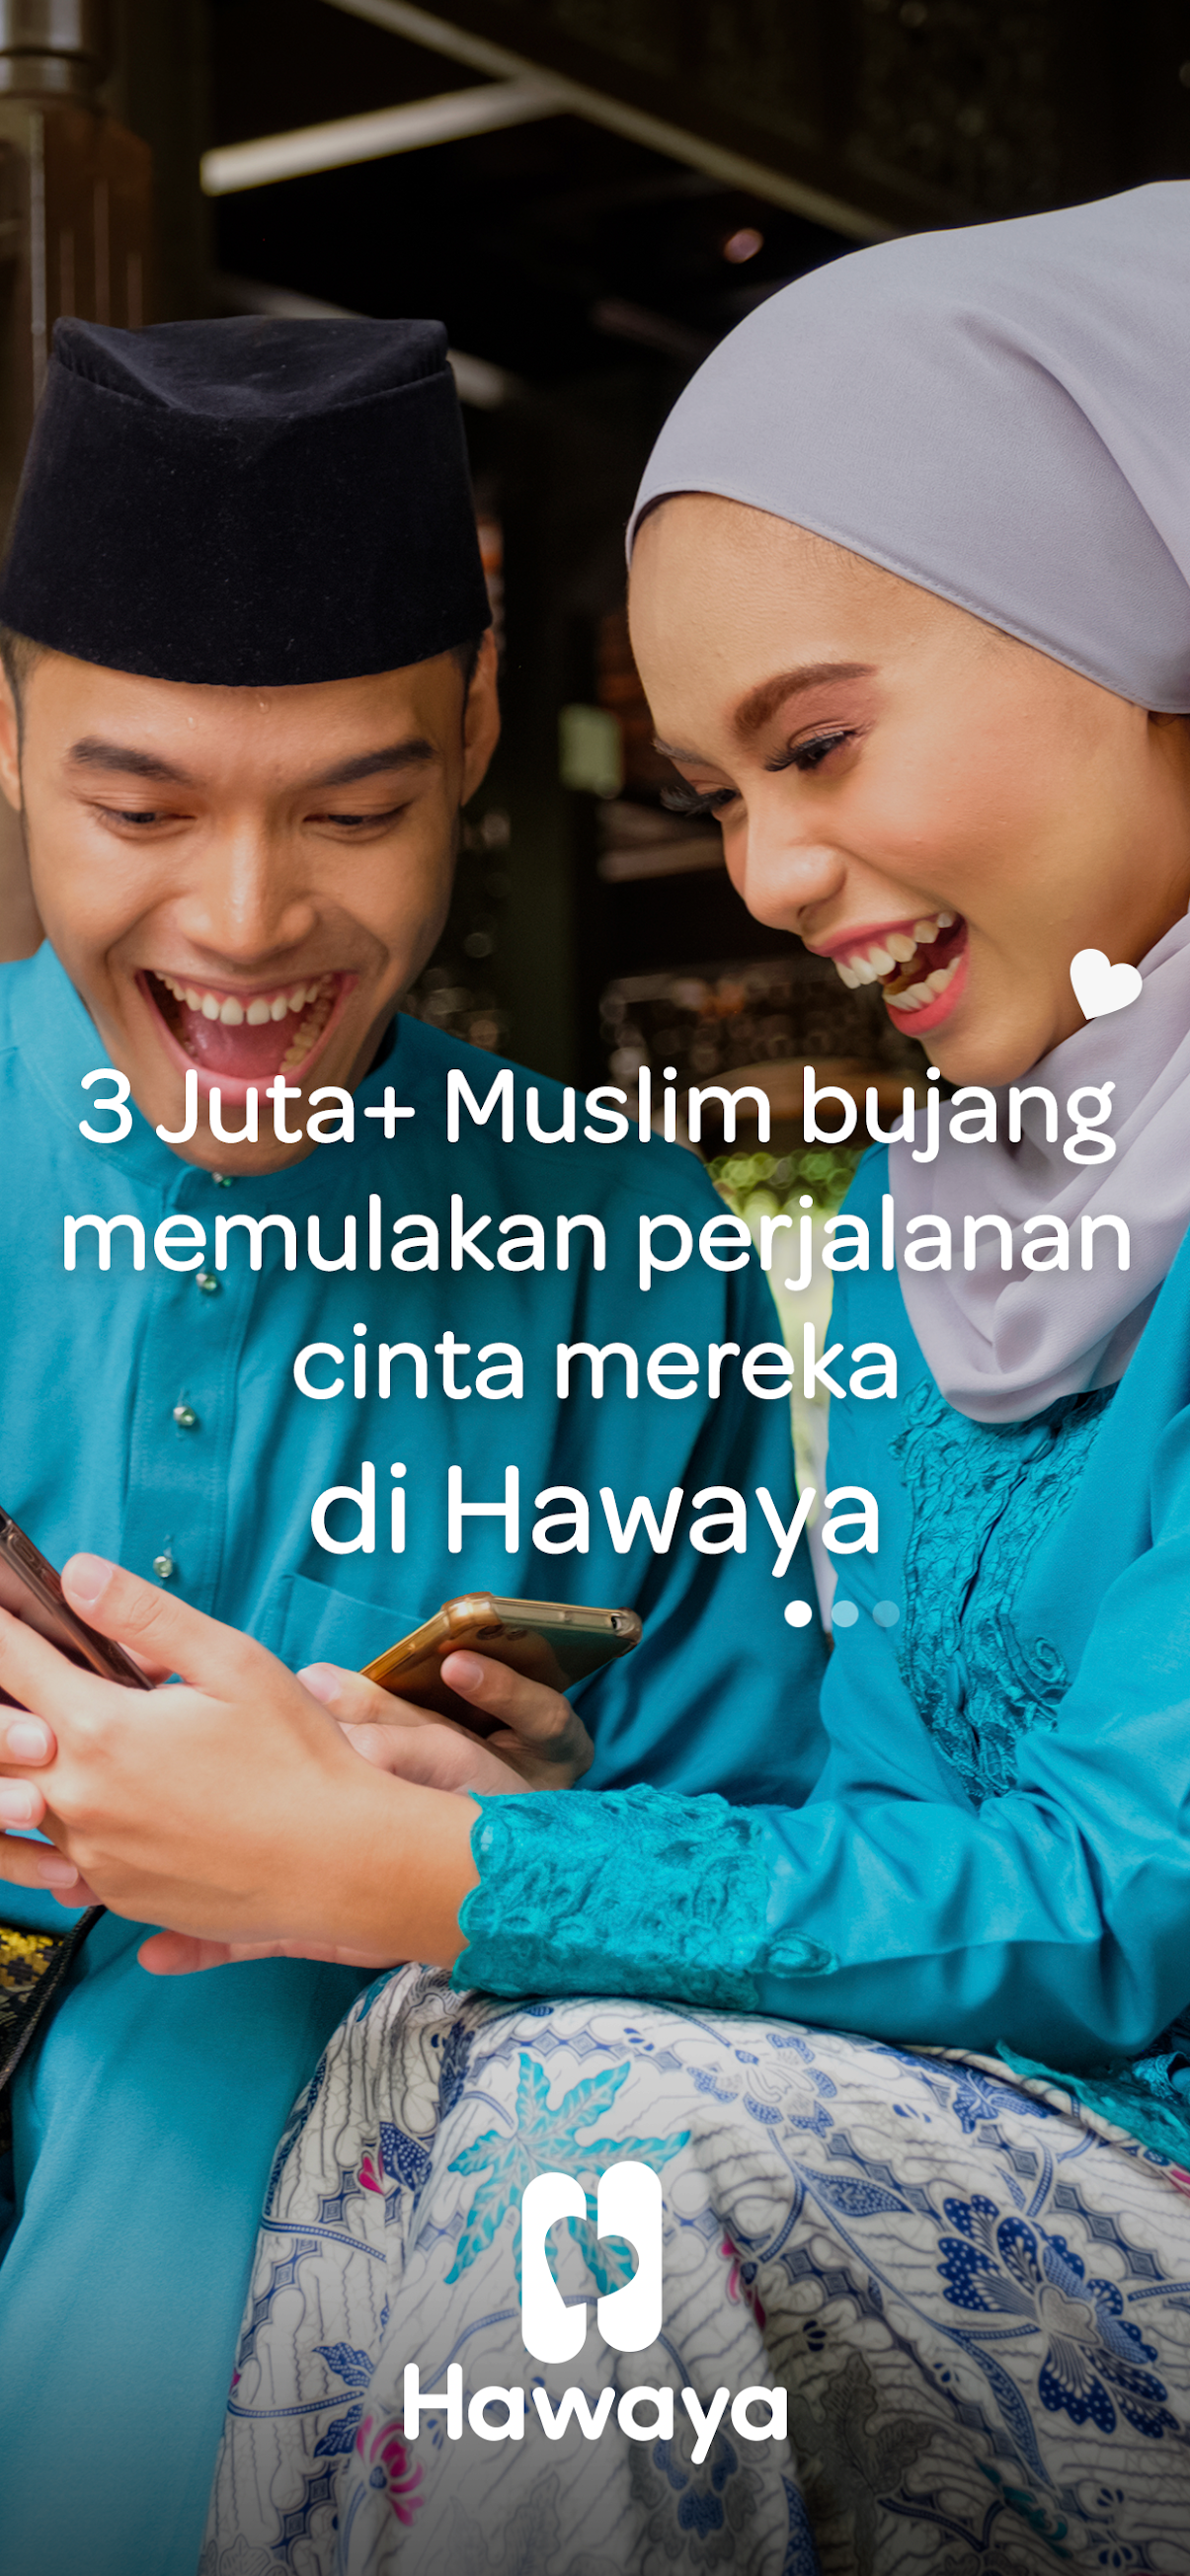 Jodoh malaysia mencari 3 Aplikasi